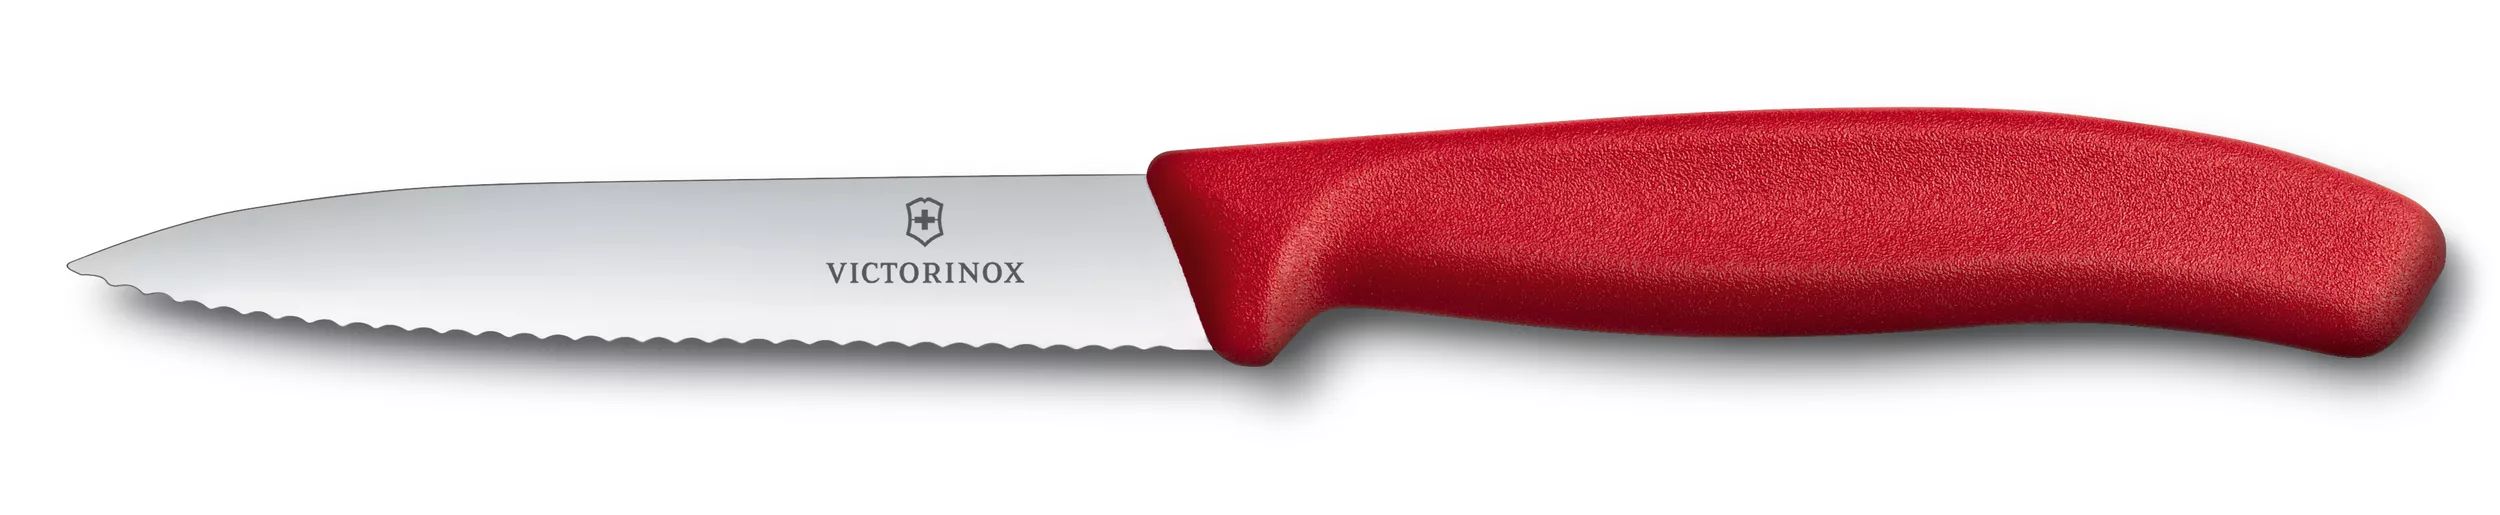 Swiss Classic Paring Knife-6.7731